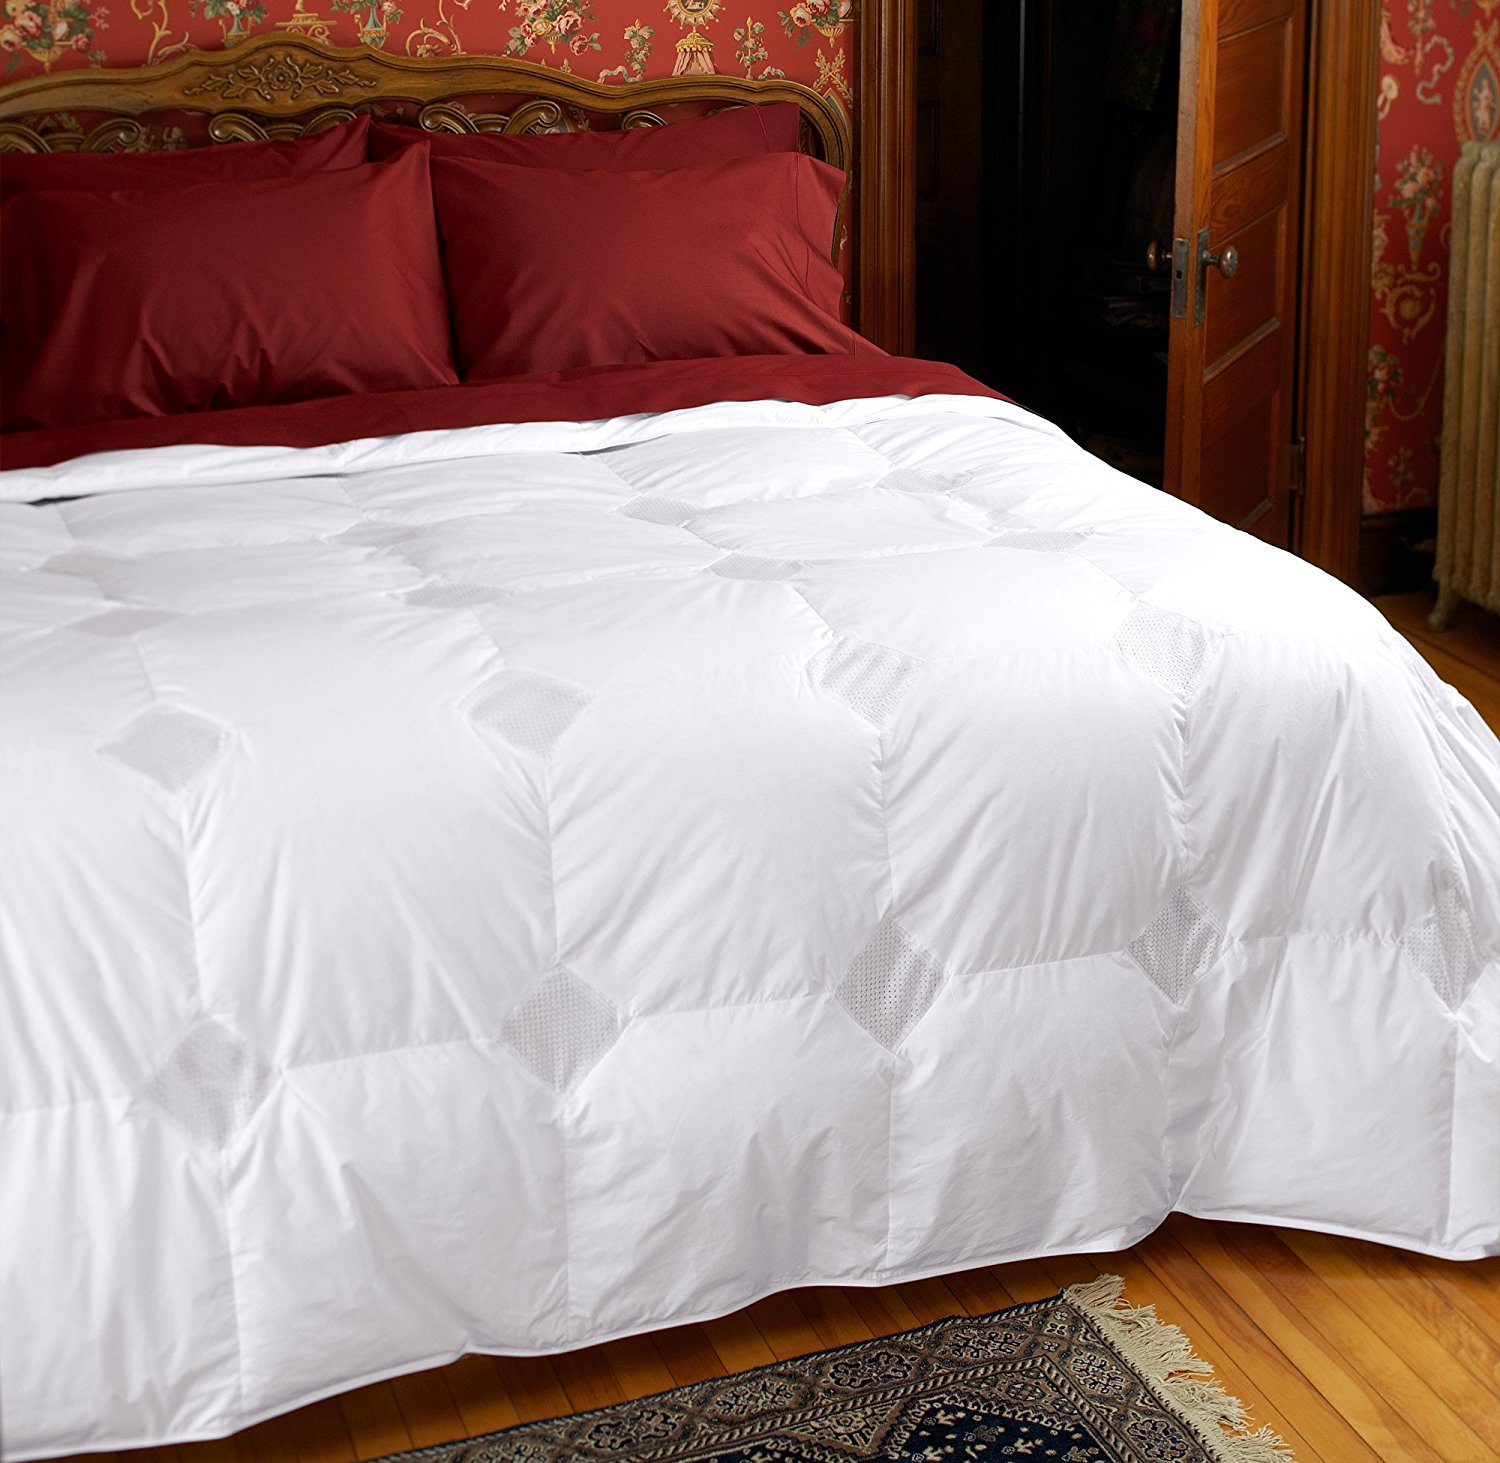 Cuddledown Temperature Regulating 800 Fill Power Down Comforter, King, Level 2, White